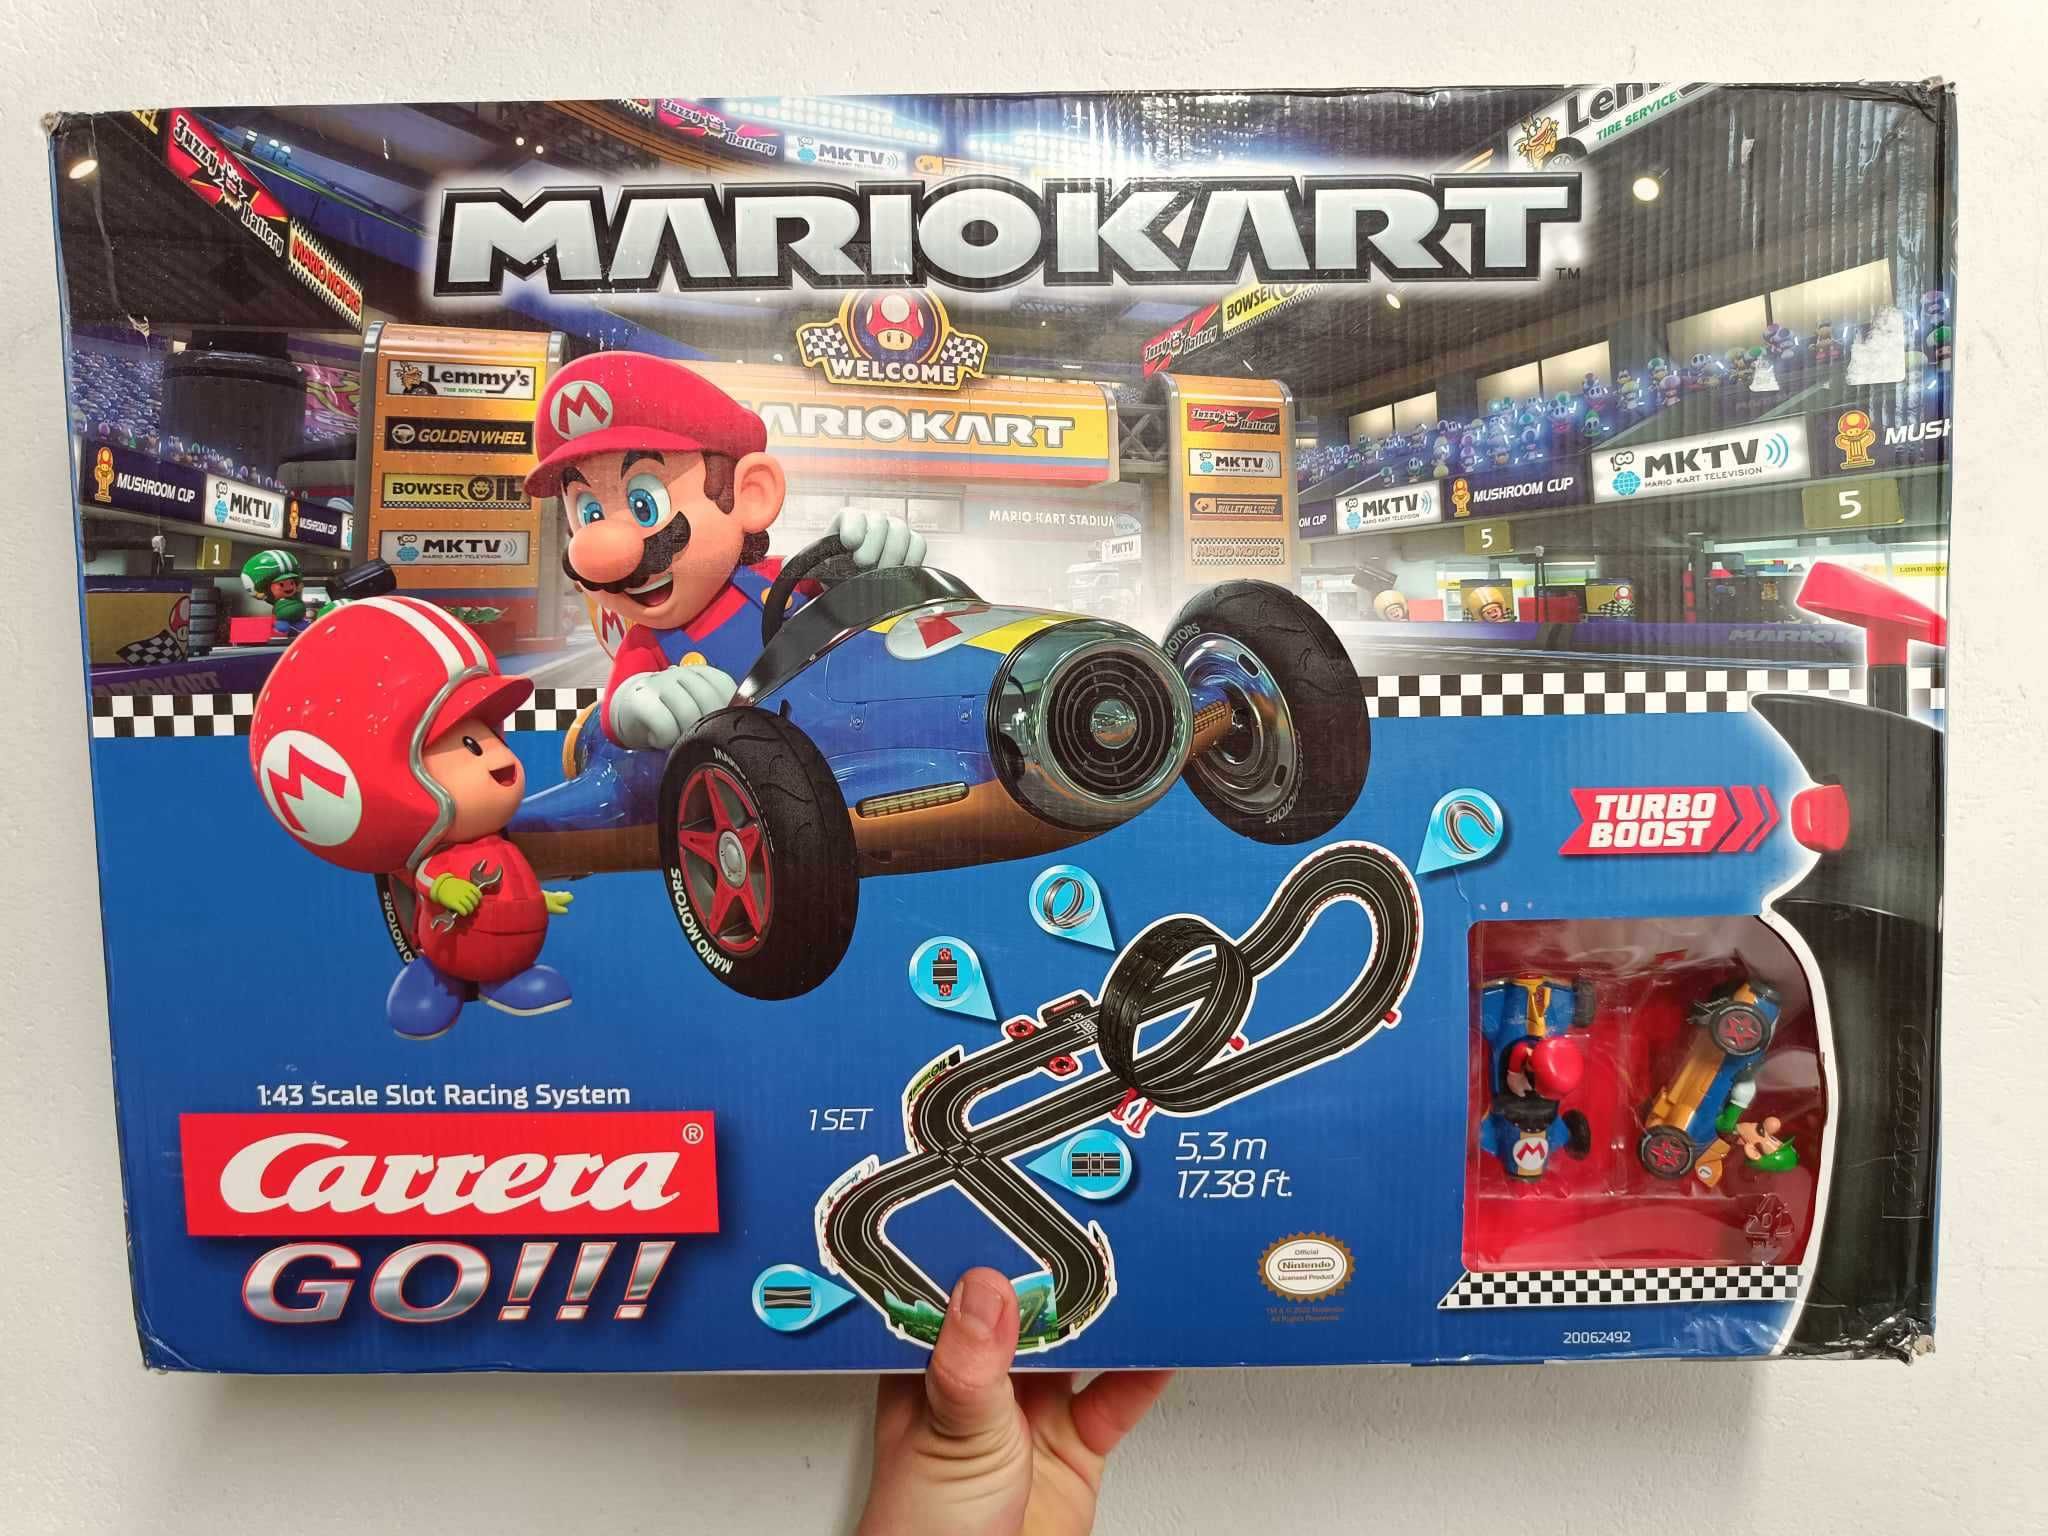 Carrera Go Nintendo Mario Kart Tor Wyścigowy, Skala 1:43